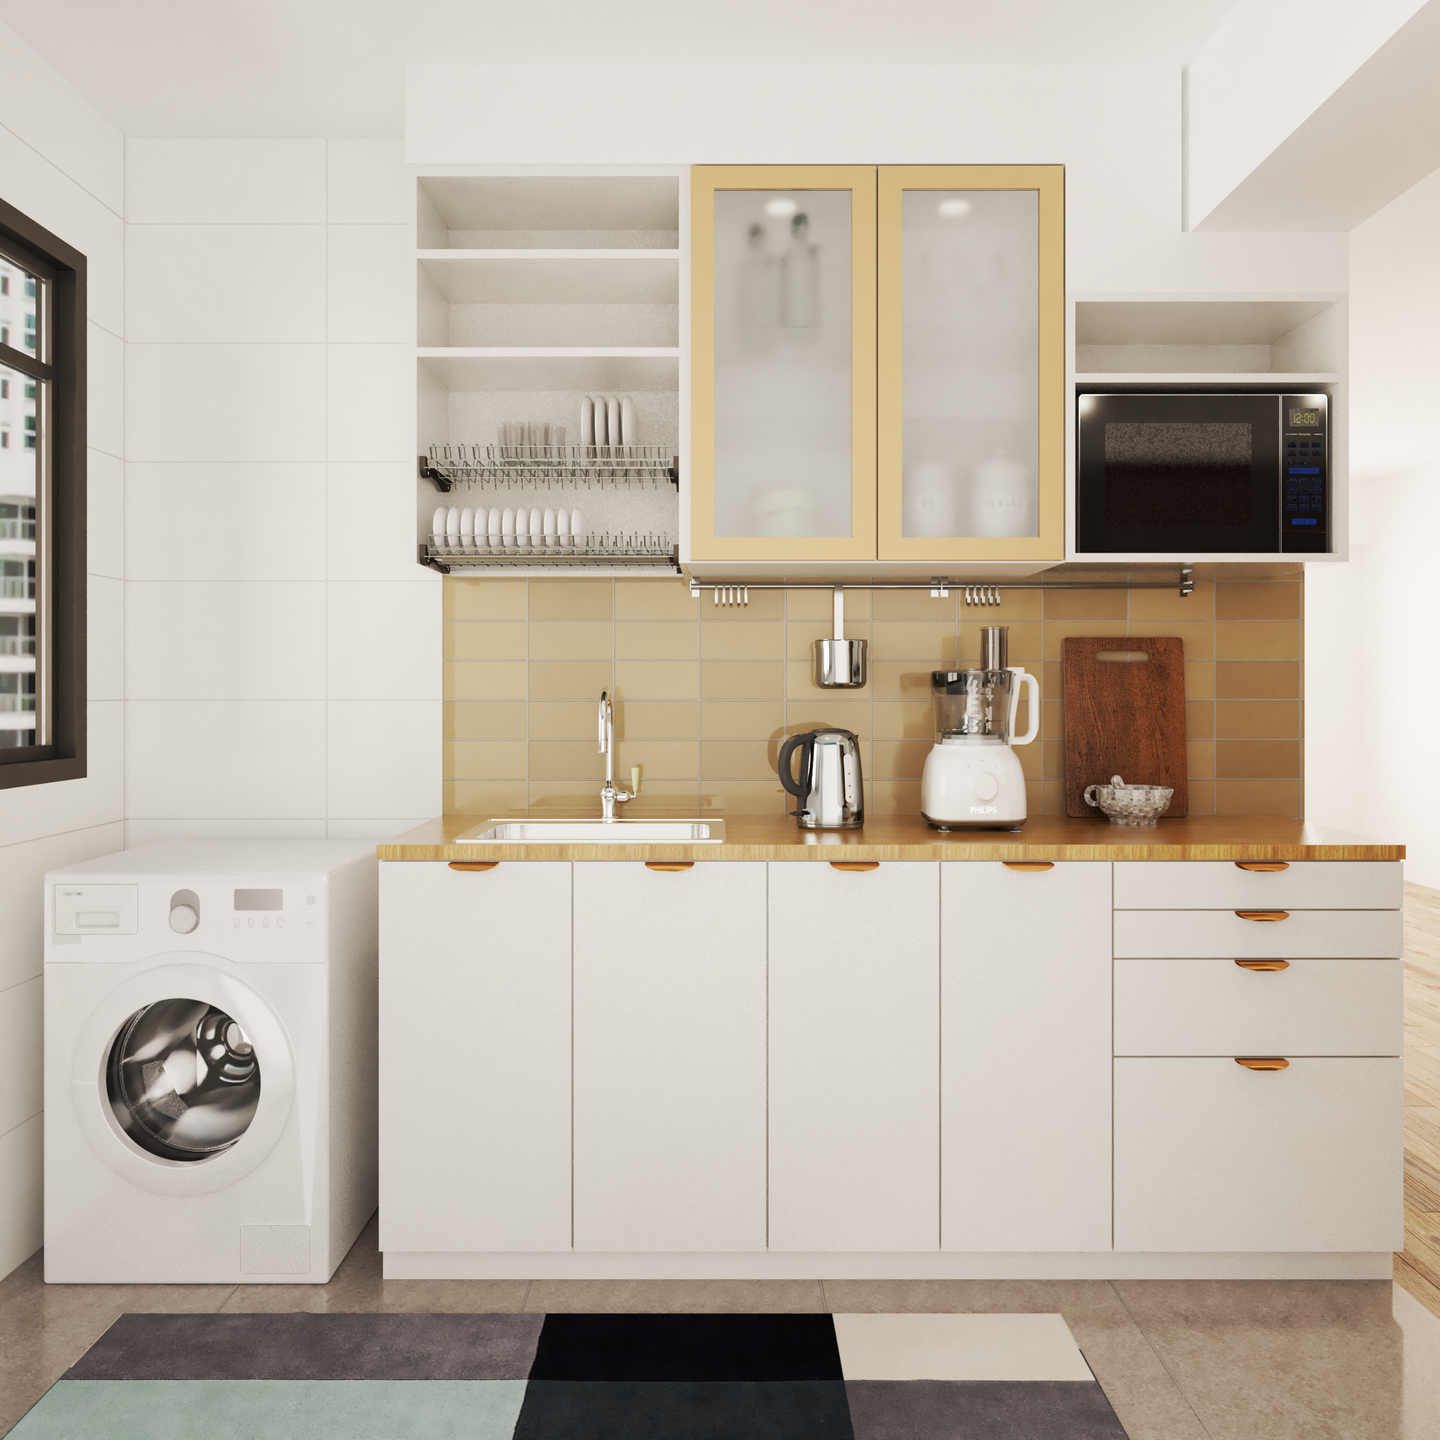 Dado Tiles Kitchen Design with Black Fridge and White Cabinets - Livspace